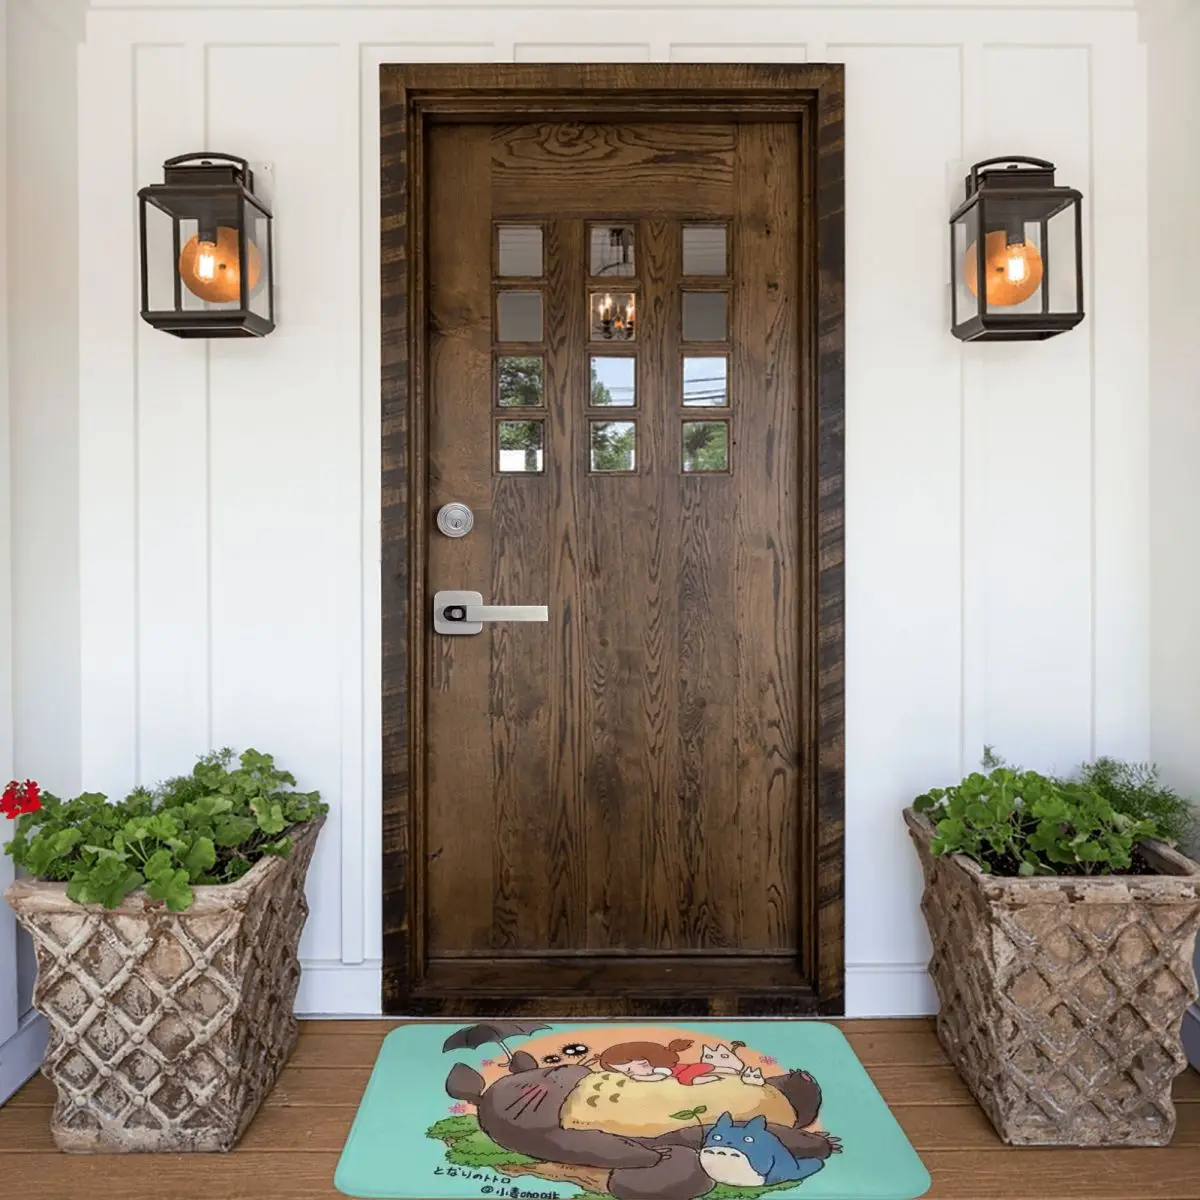 My Neighbor Totoro Anime Non-slip Doormat Sleep Bath Kitchen Mat Welcome Carpet Home Modern Decor images - 6